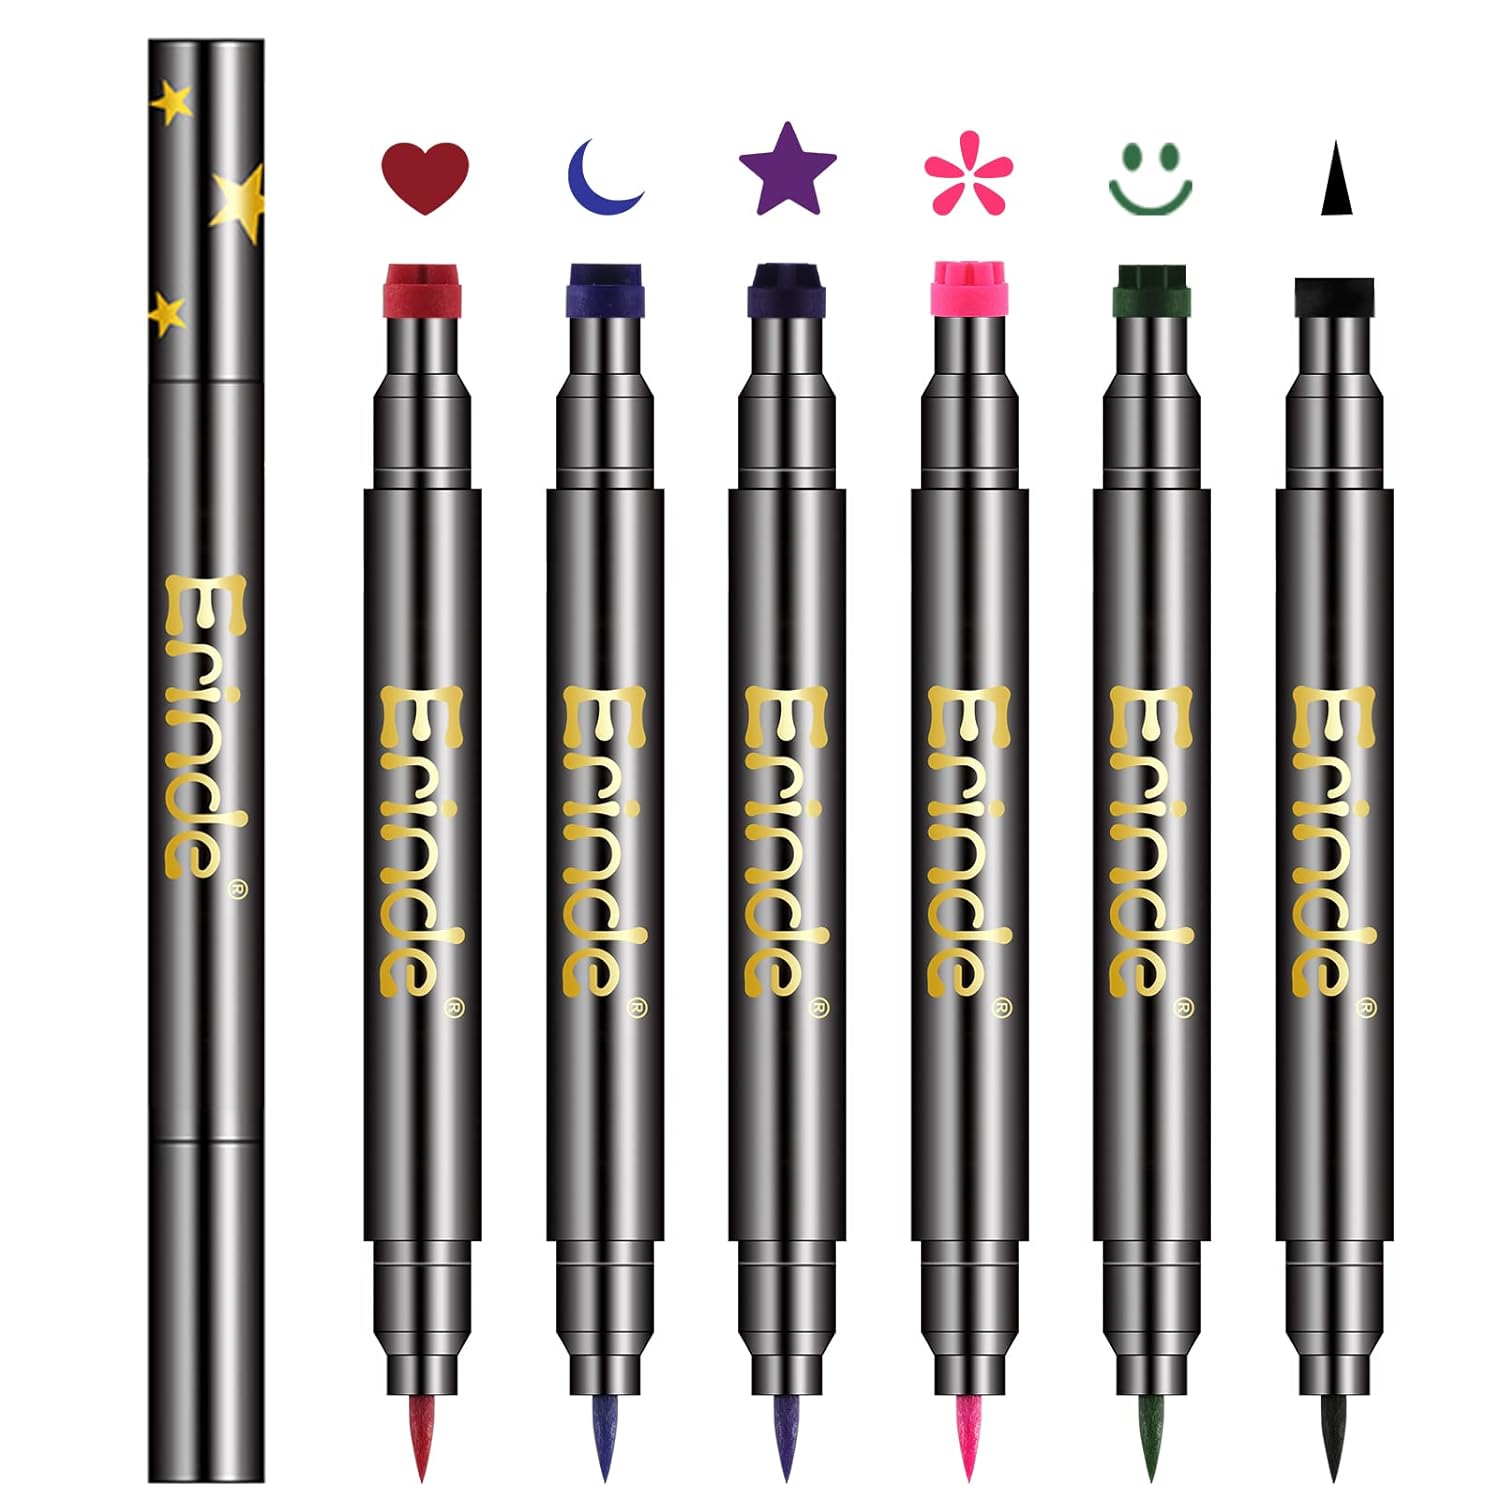 6 Colors Double-headed Liquid Eyeliner Stamp Pen Set